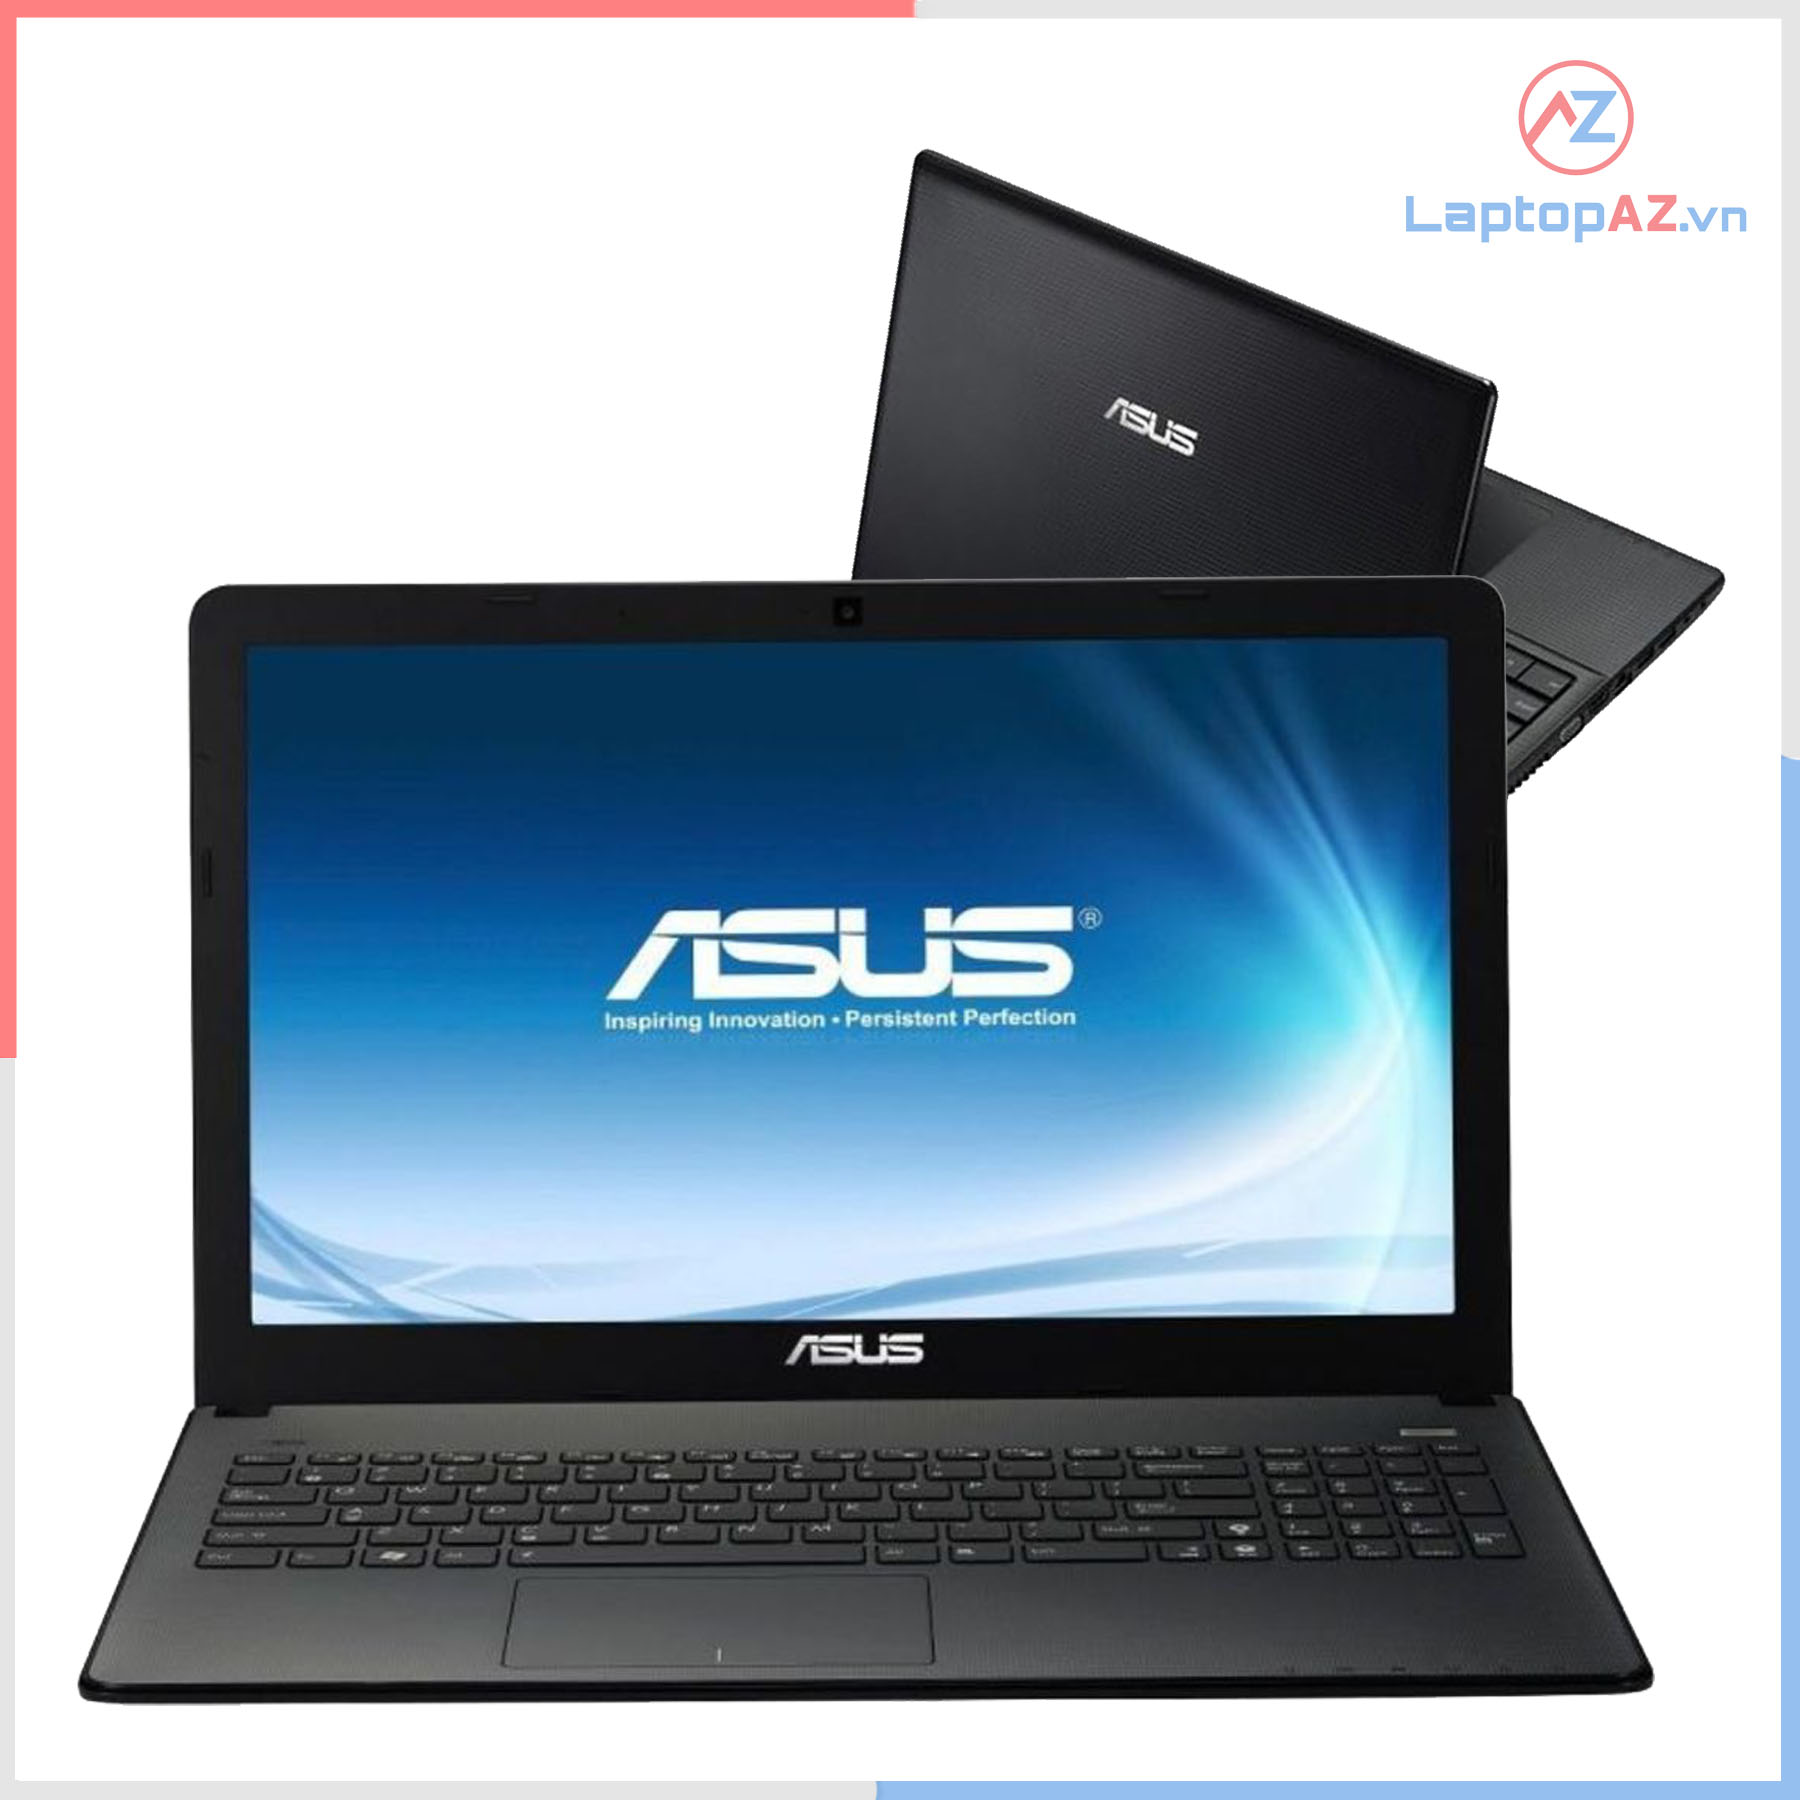 Laptop cũ Asus X55U (Dual-Core AMD E-450 APU, 4GB, 500GB, VGA 1 GB AMD Radeon HD Graphics 6230M, 15.6 inch)